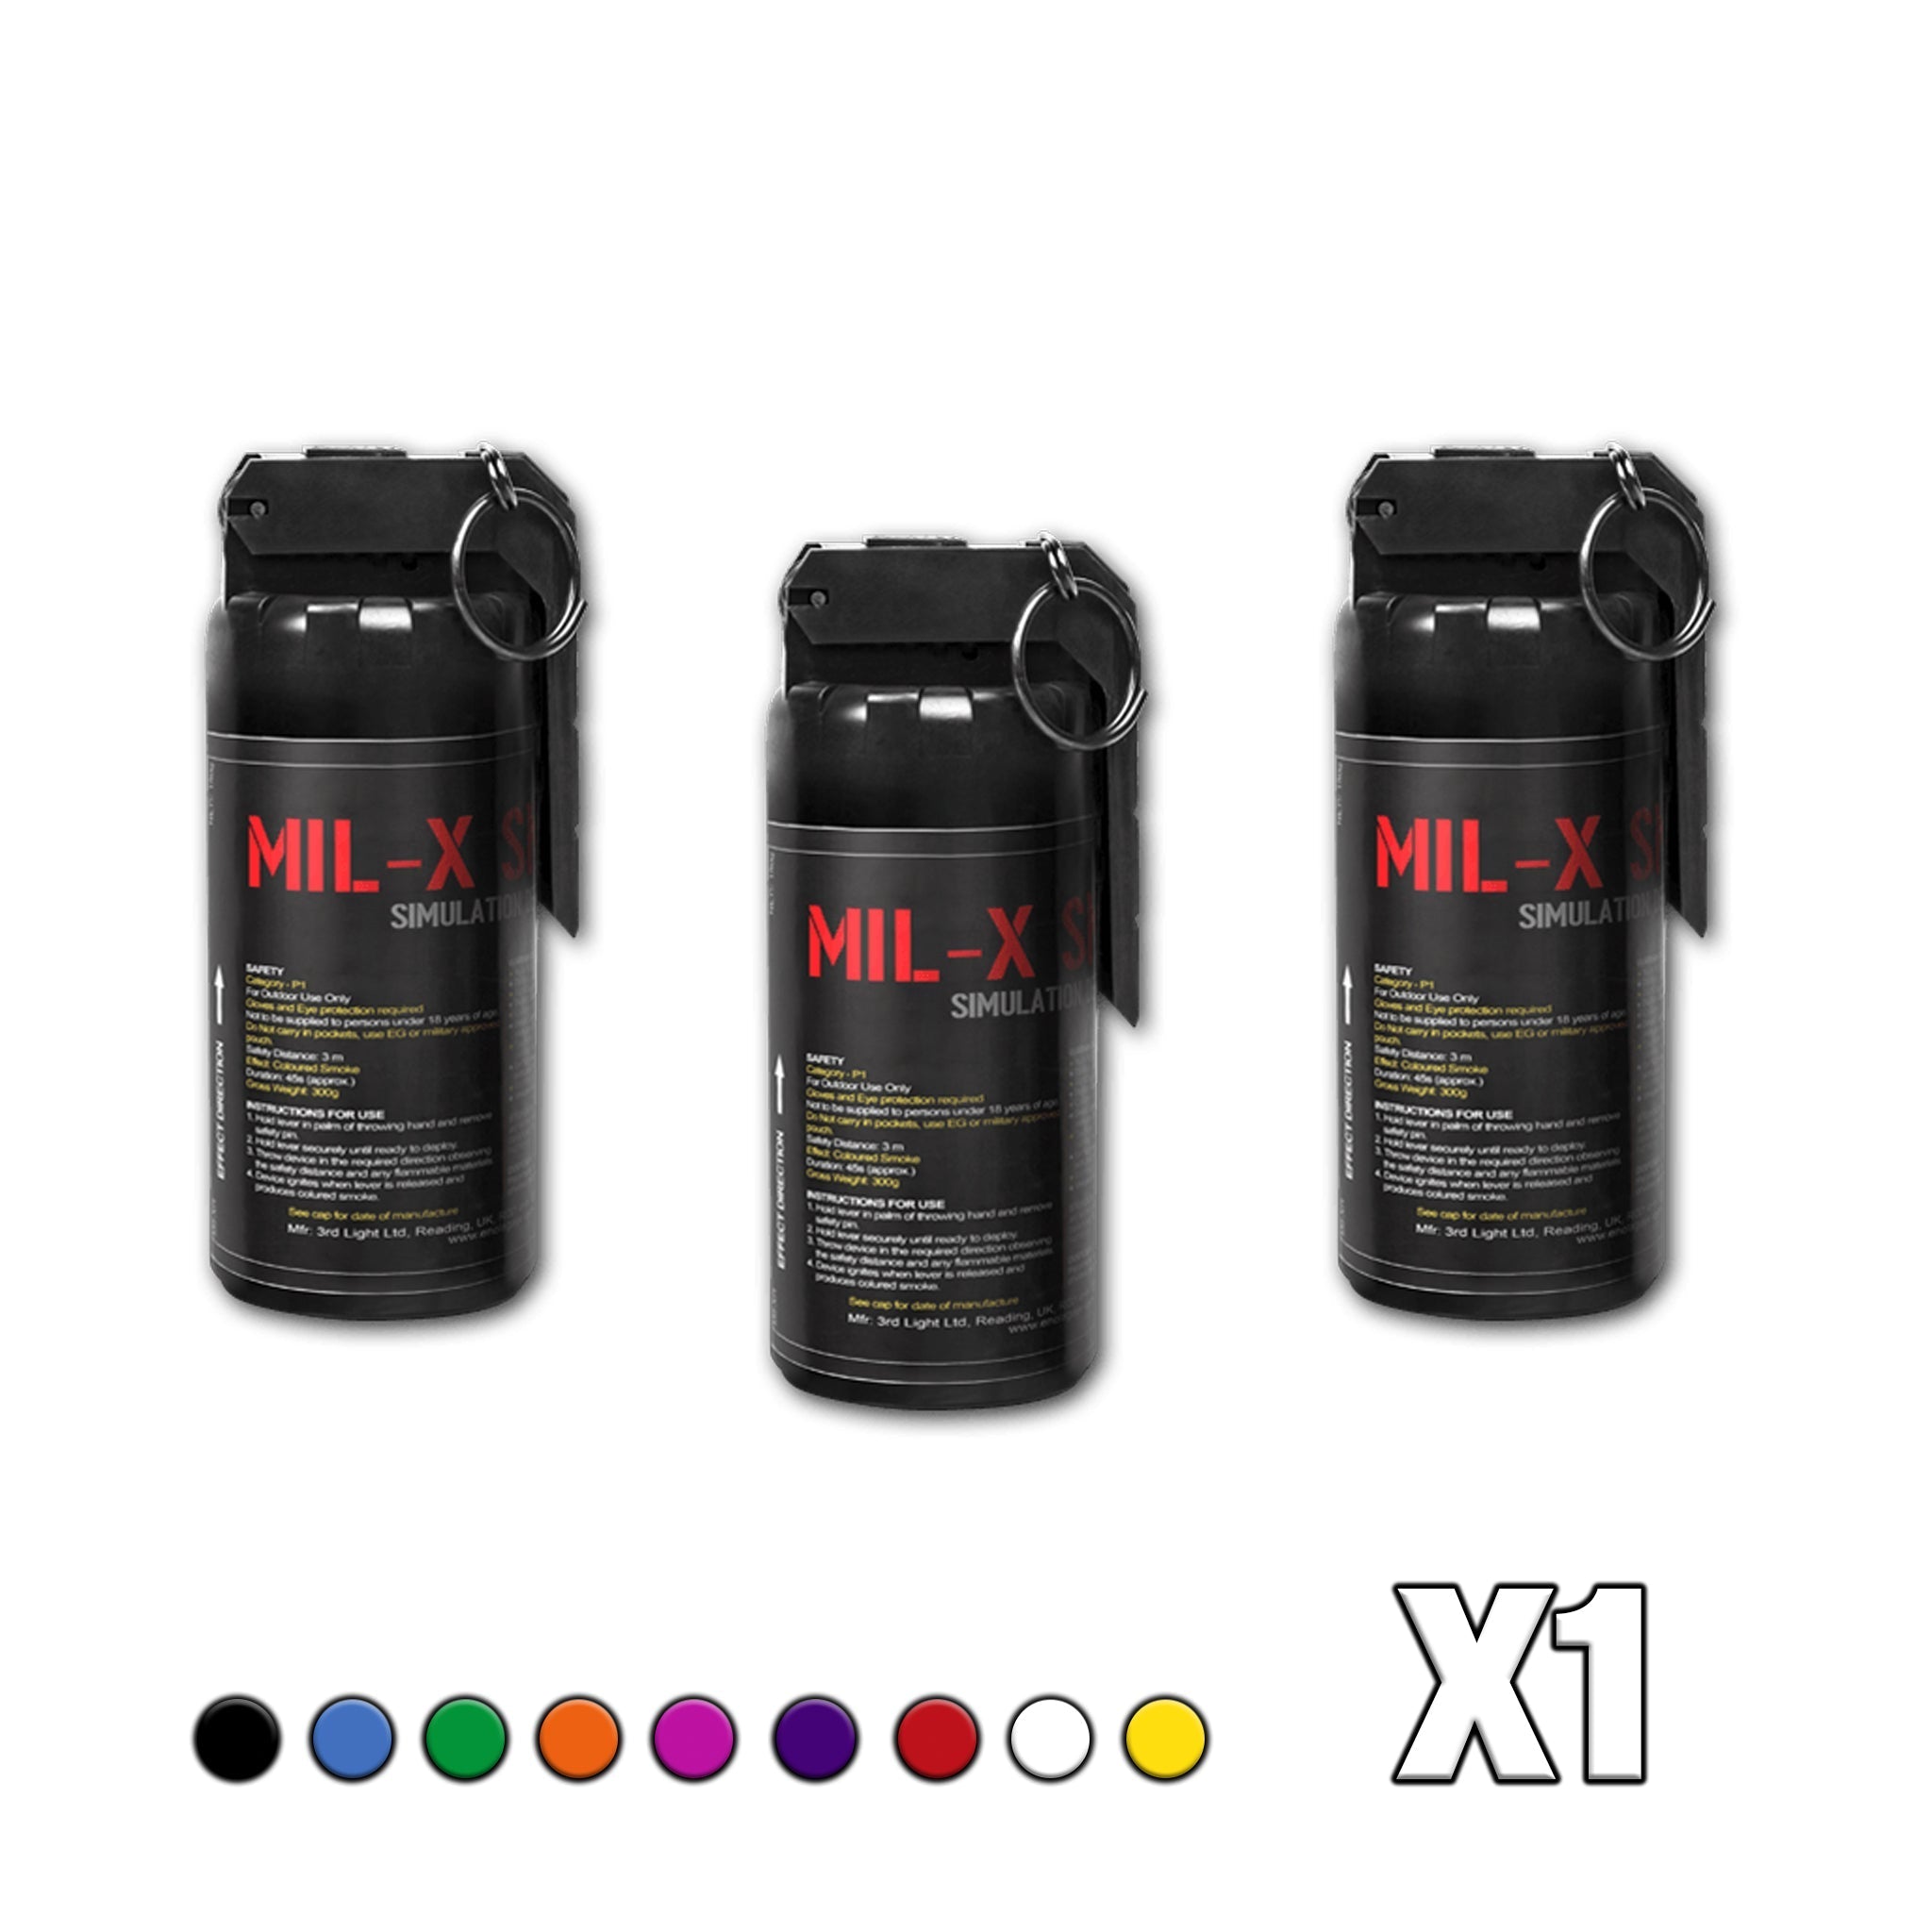 Mil-X Simulation Smoke Grenades - Single